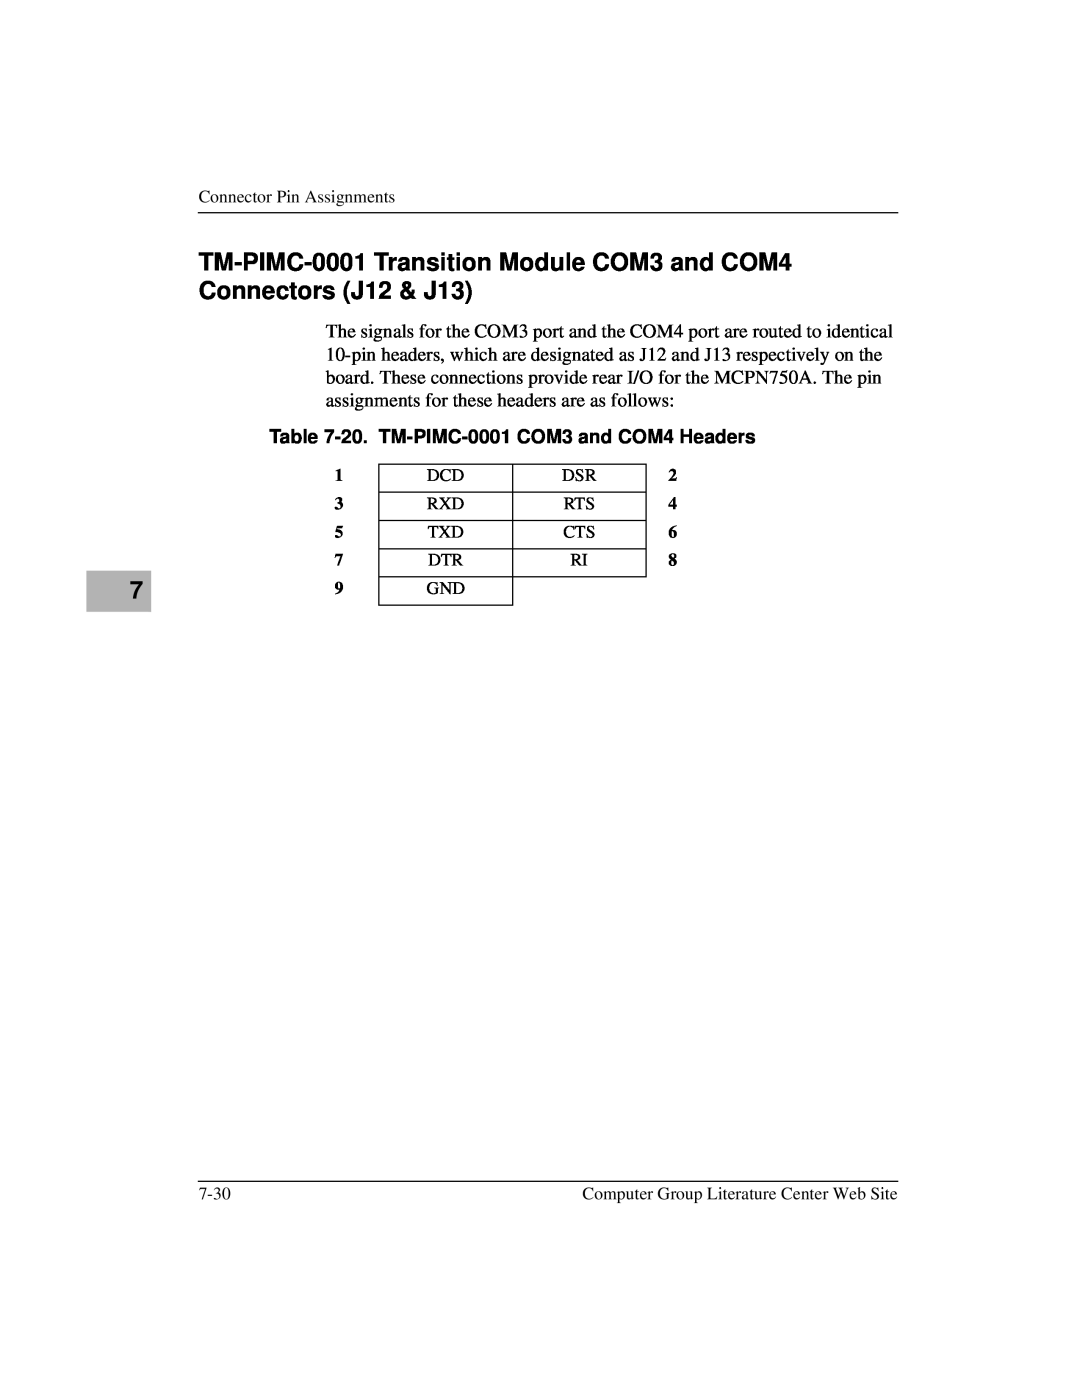 Motorola MCPN750A, IH5 manual TM-PIMC-0001 Transition Module COM3 and COM4 Connectors J12 & J13 